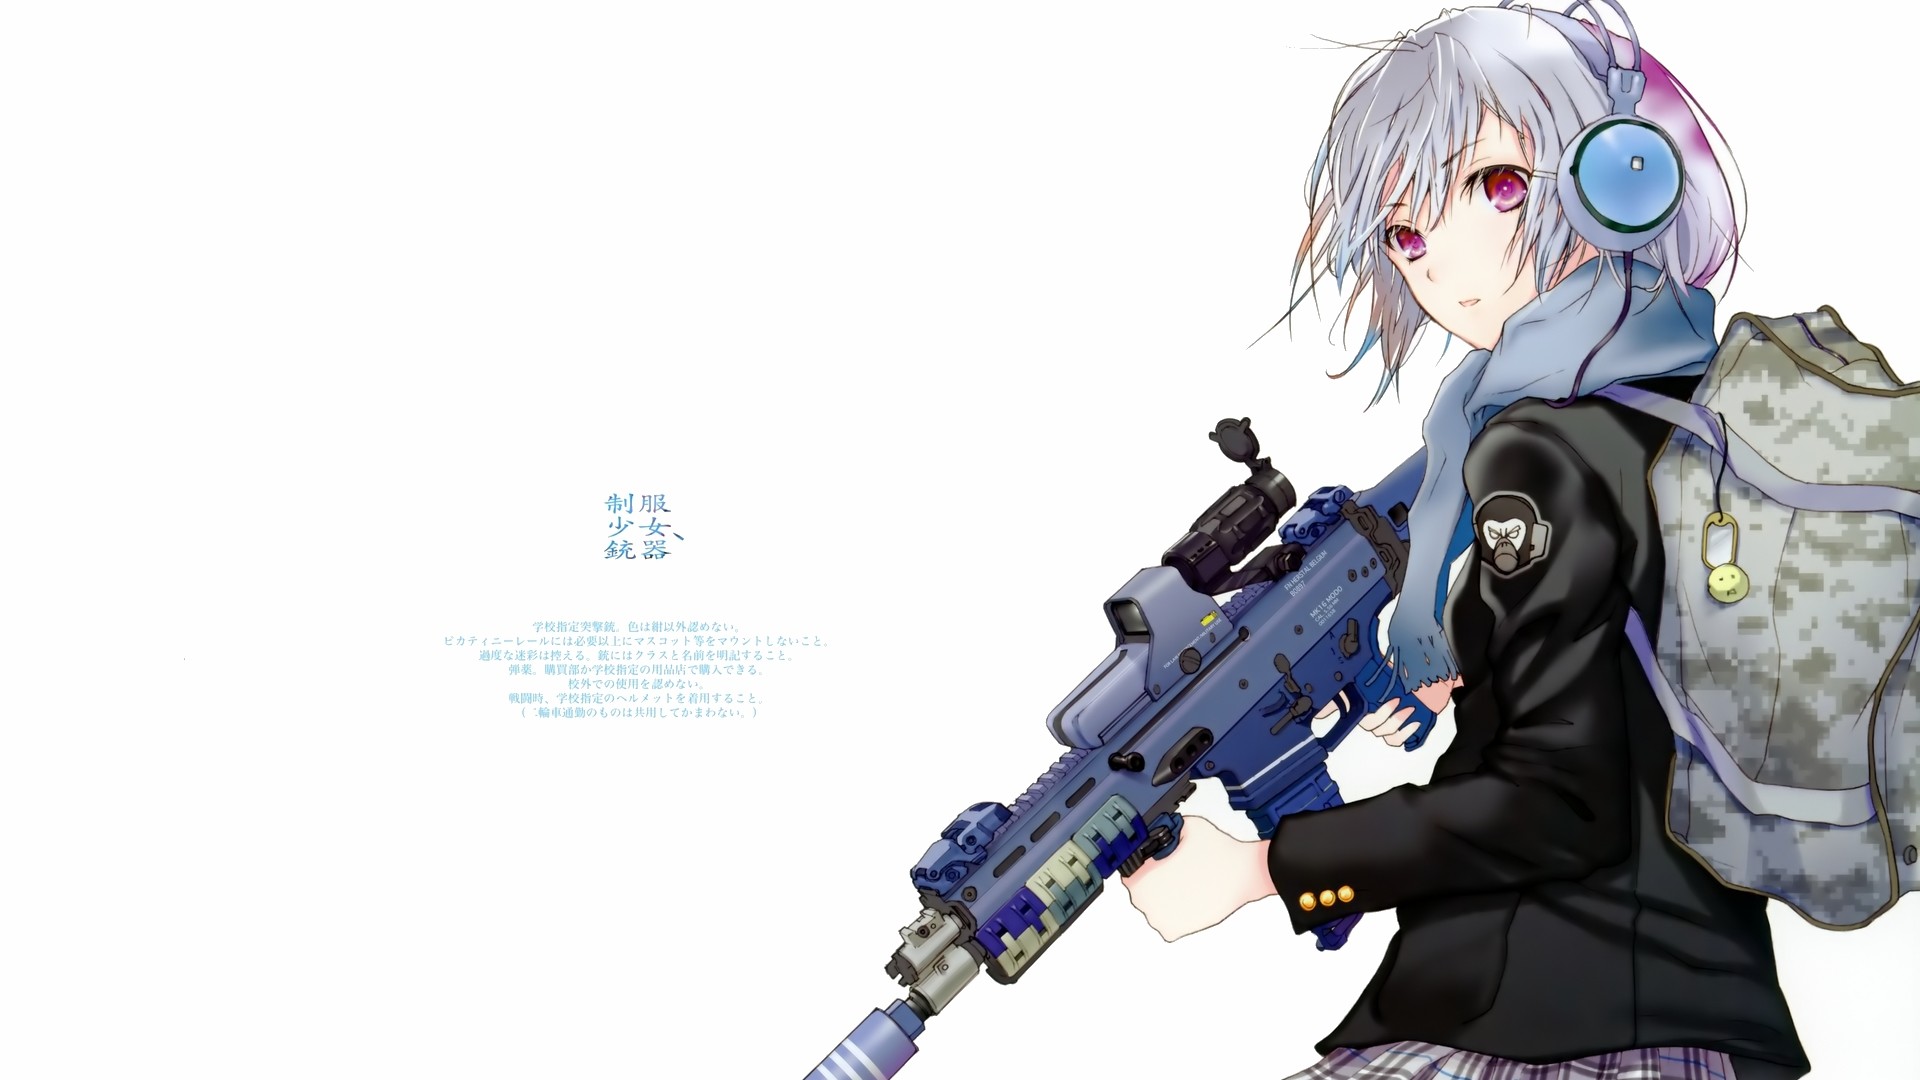 1920x1080 Anime sniper girl 797873 2880x1800px high def desktop background .